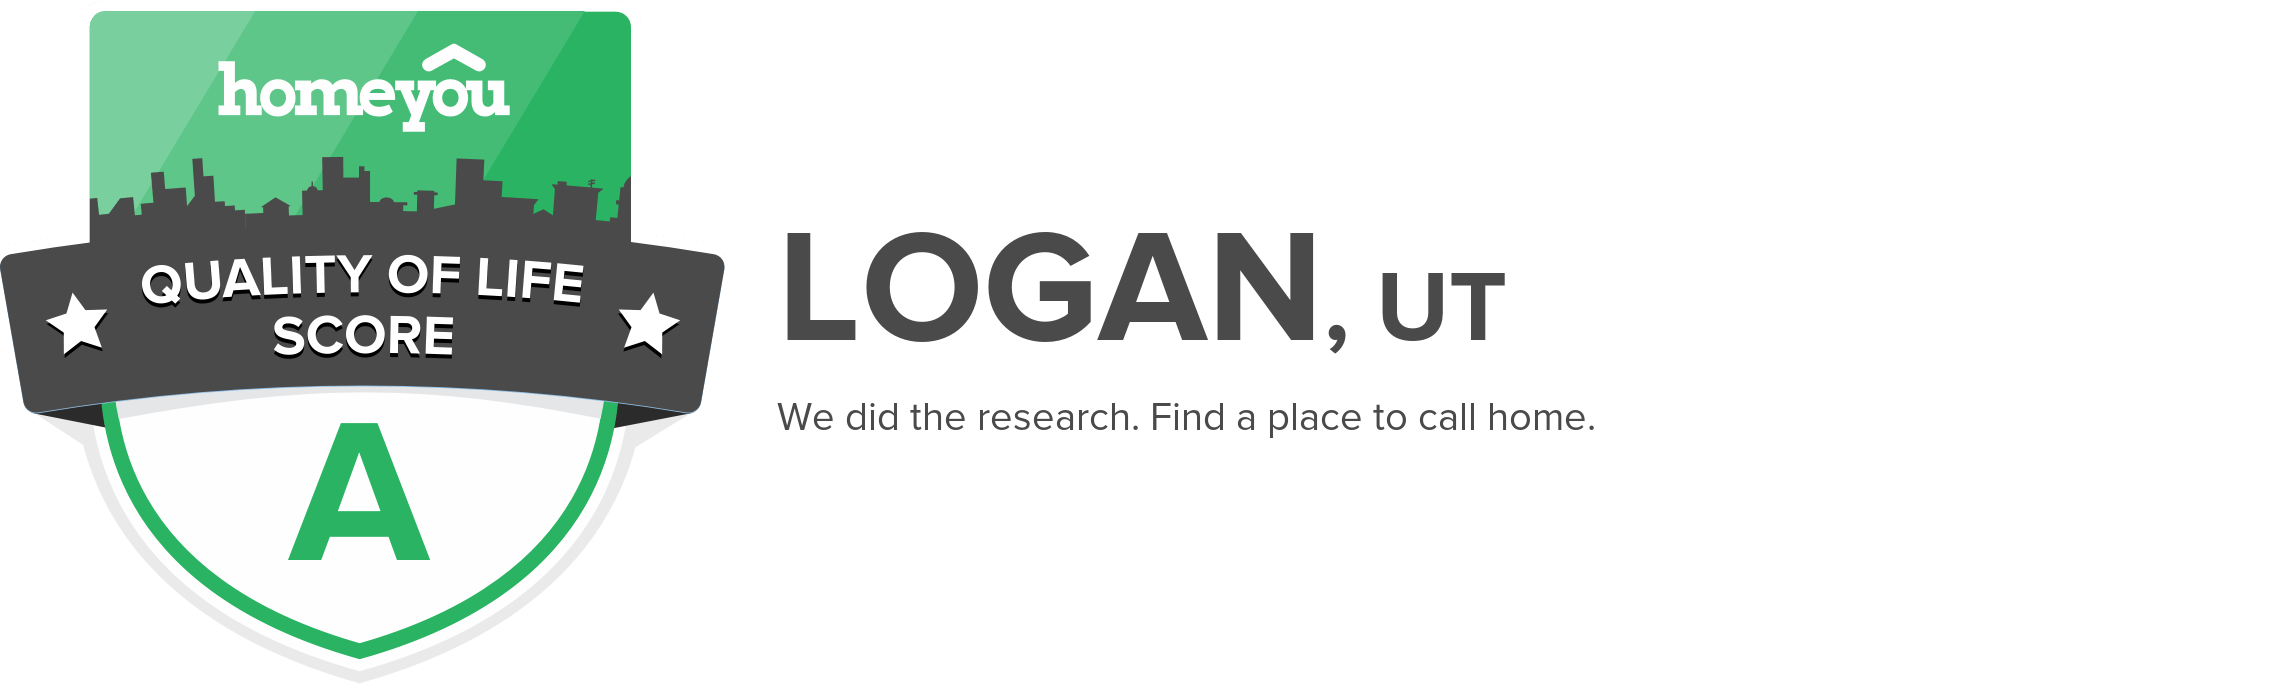 Logan, UT